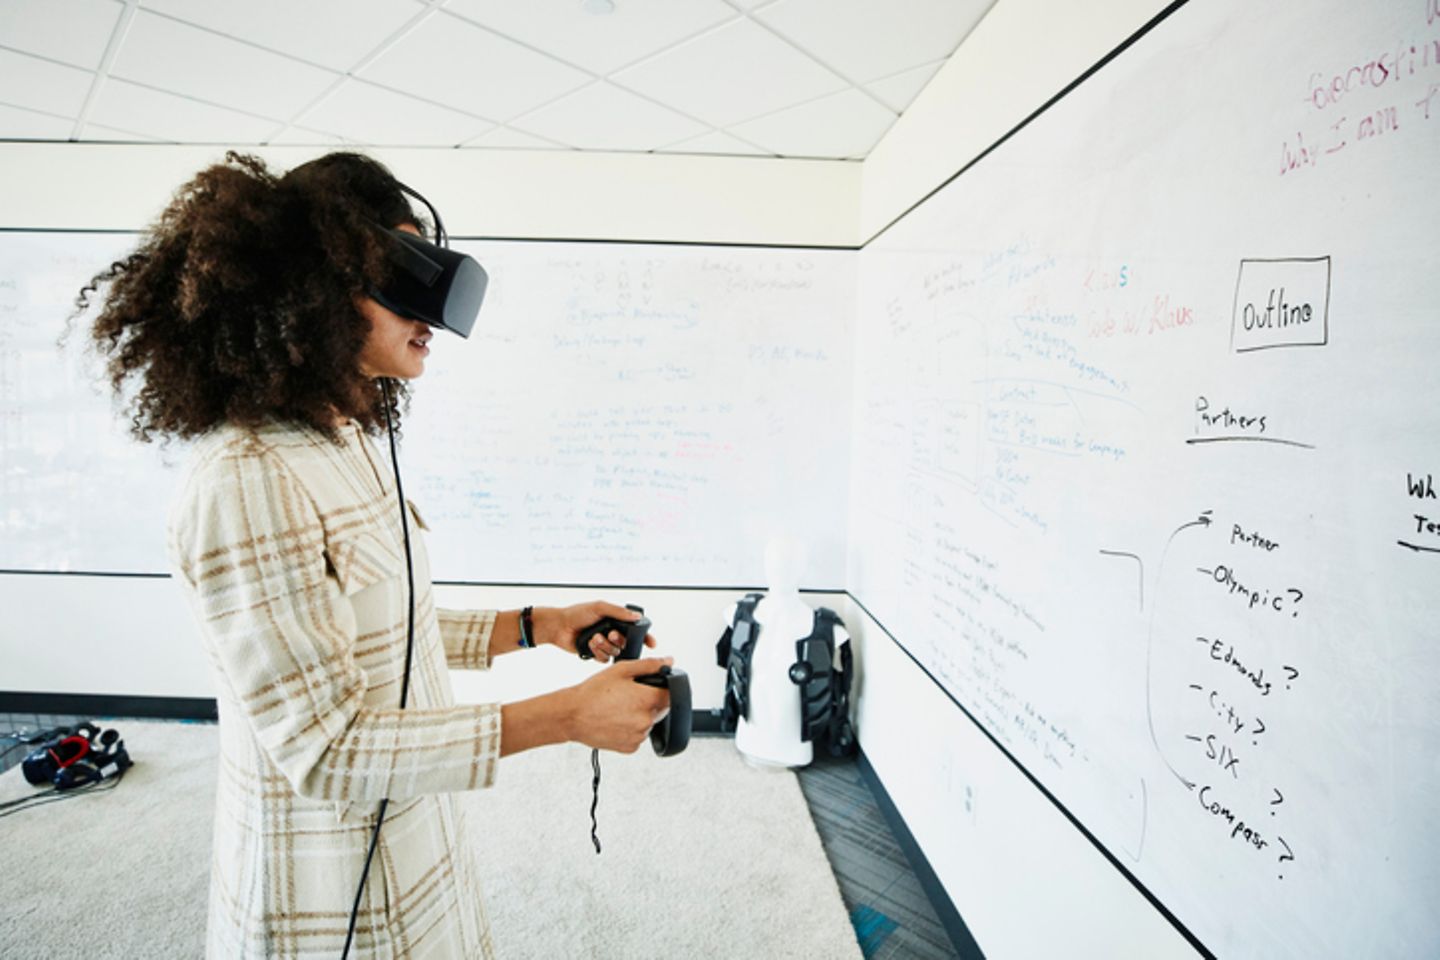 A woman tests a virtual reality headset